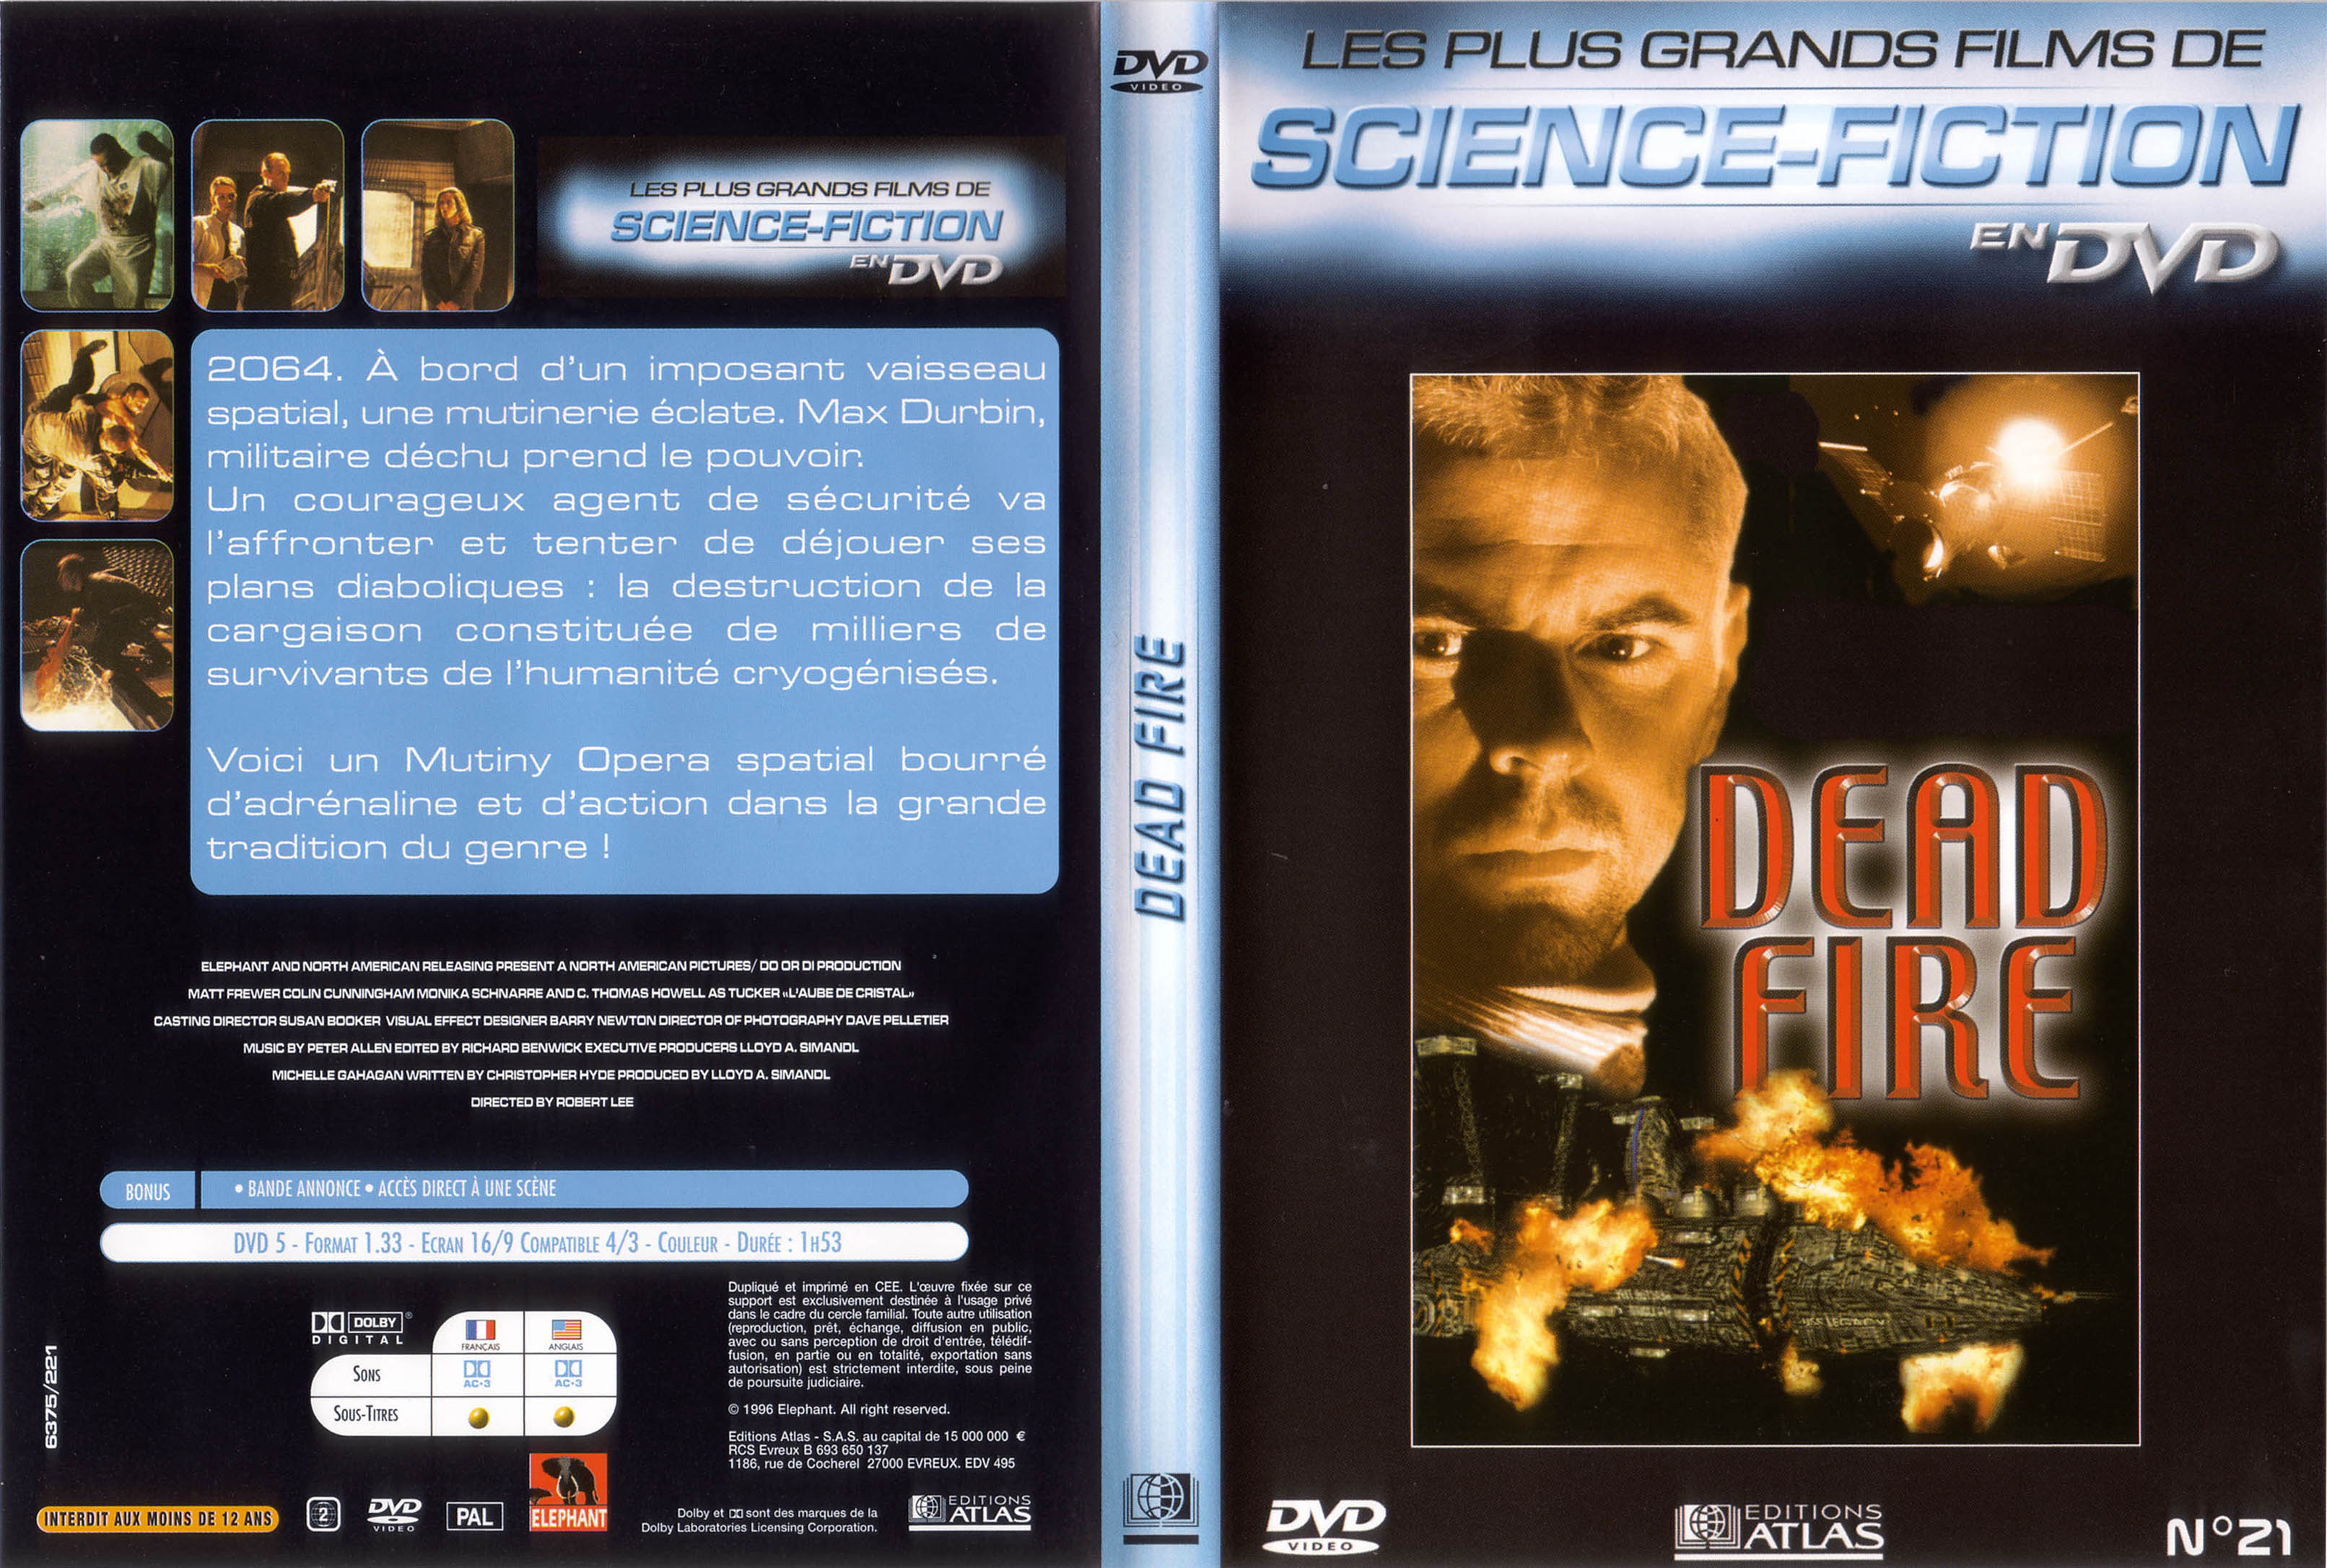 Jaquette DVD Dead fire